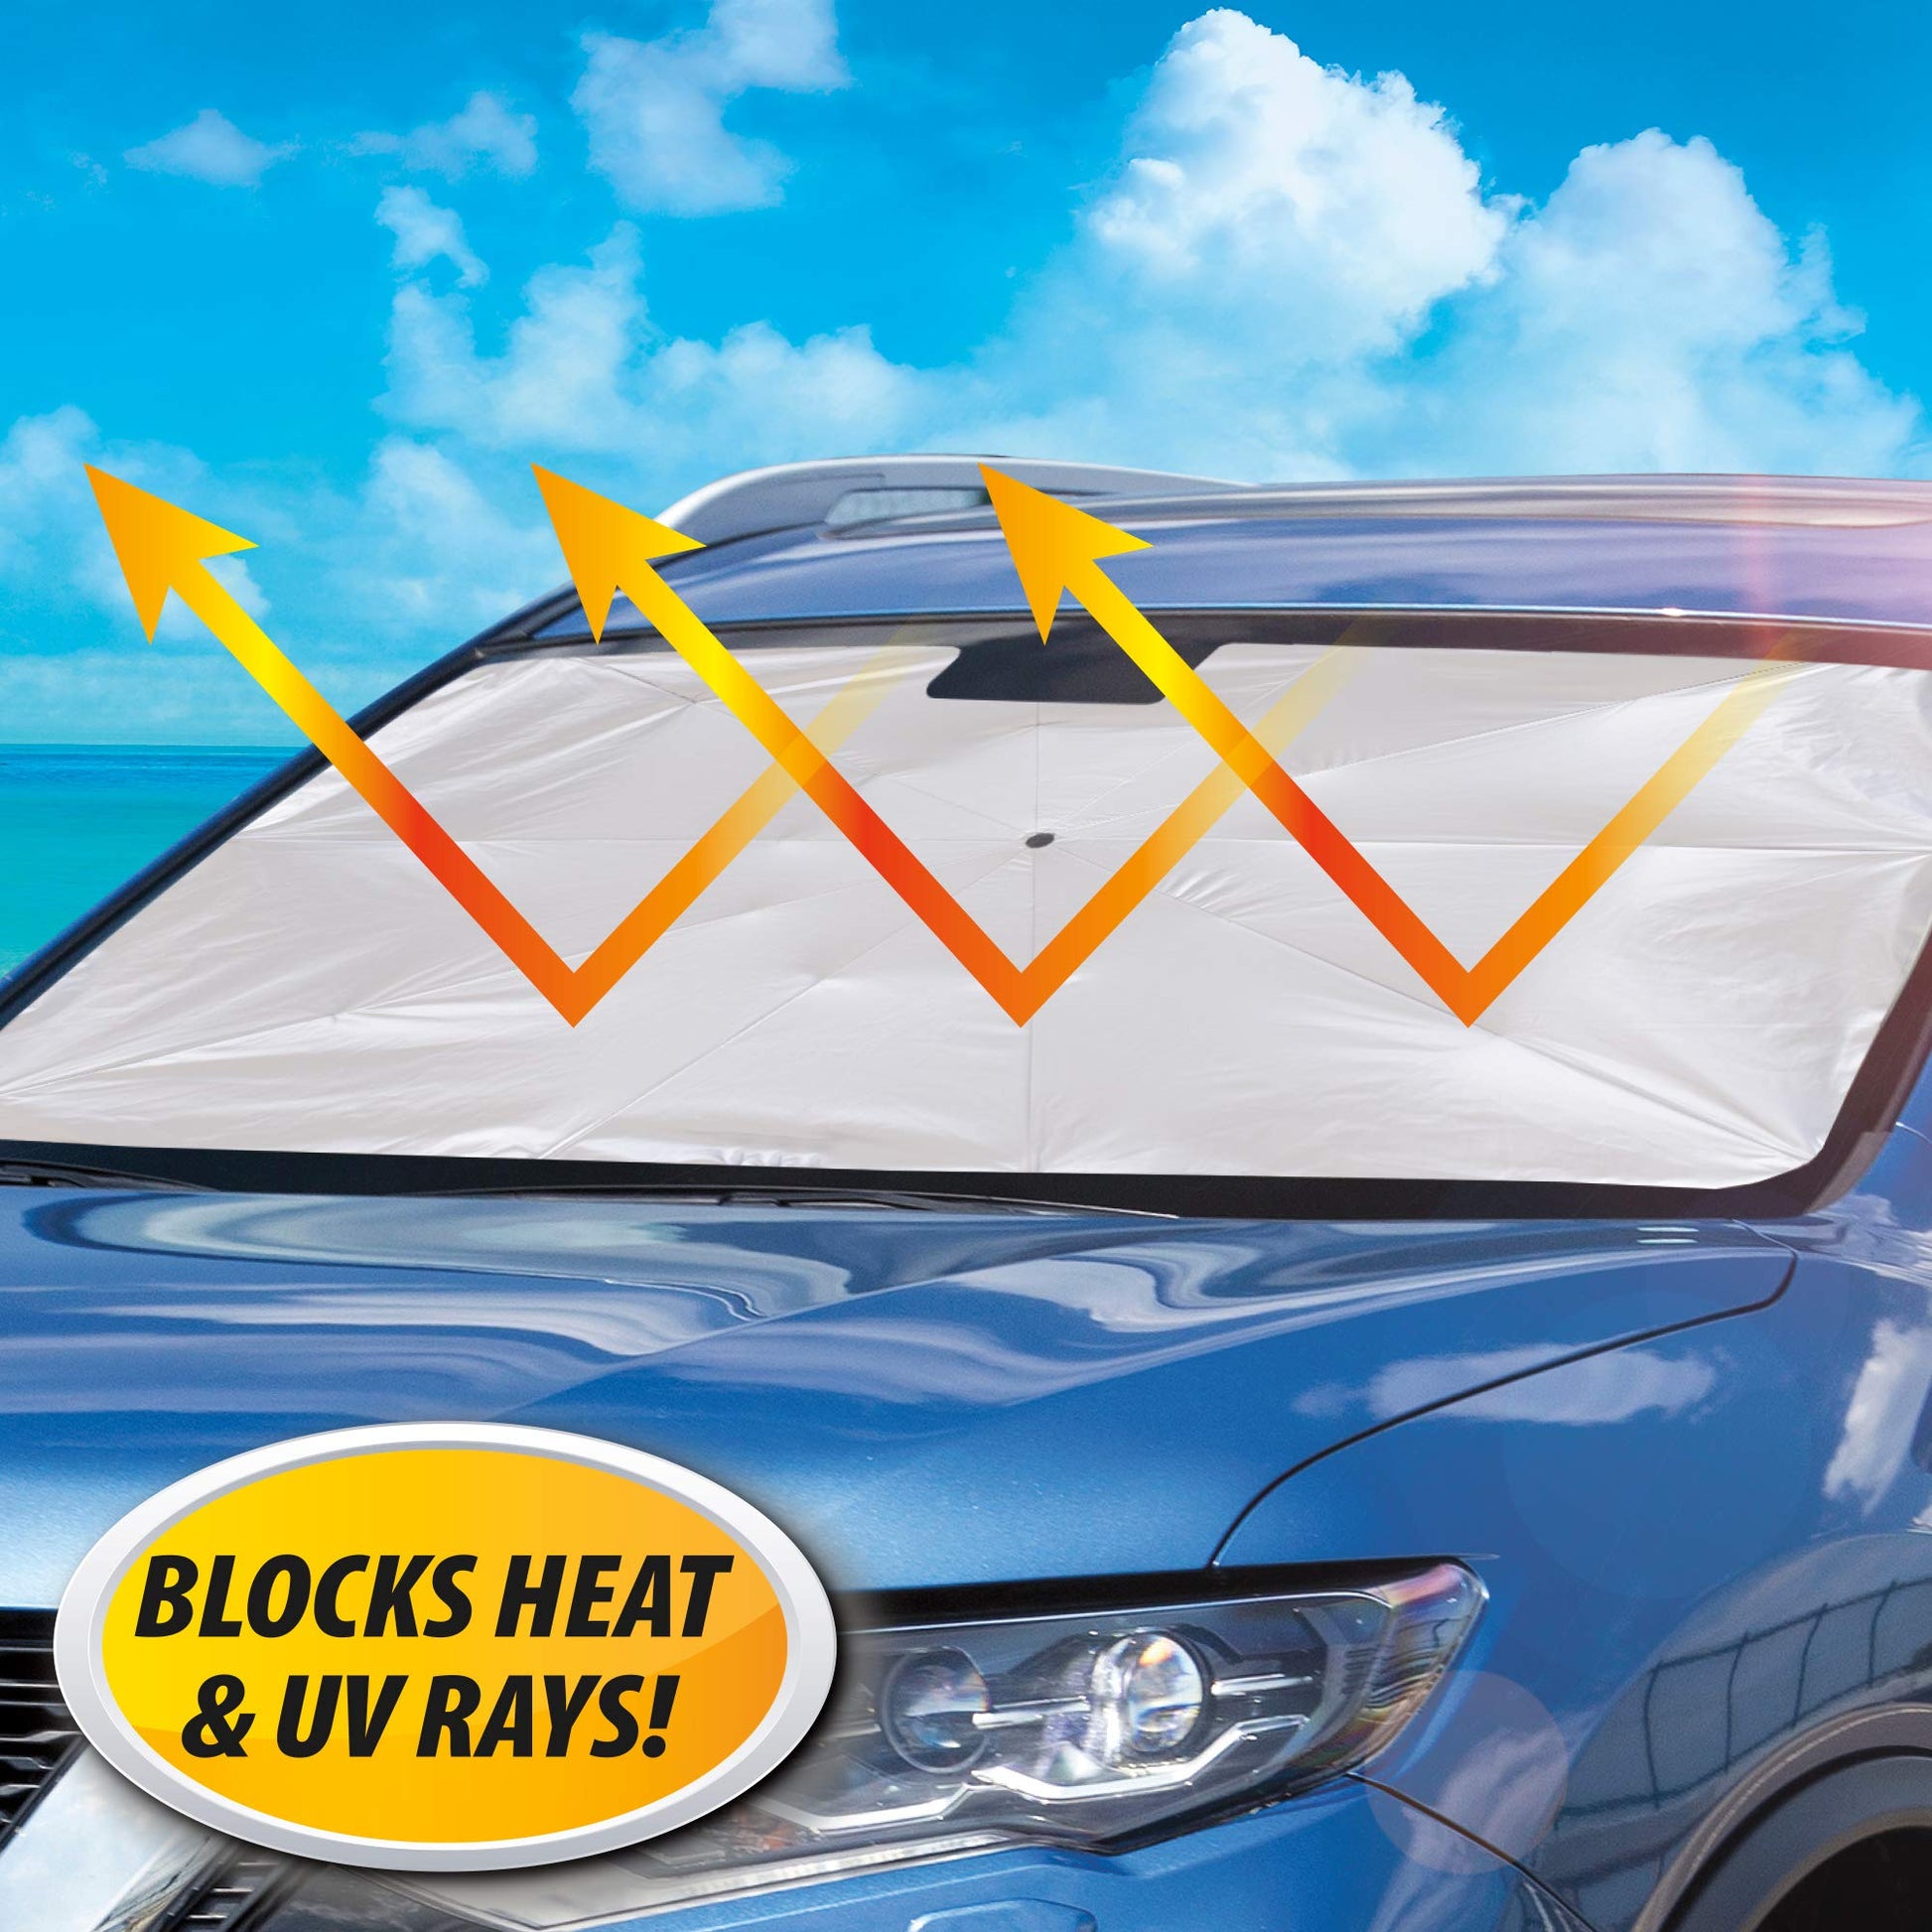 Car Windshield Sun Shade - Foldable Umbrella Reflective Sunshade For Car  Front Window Block Uv Rays And Heat Car Visor Keep Vehicle Cool Cover Most  Ca